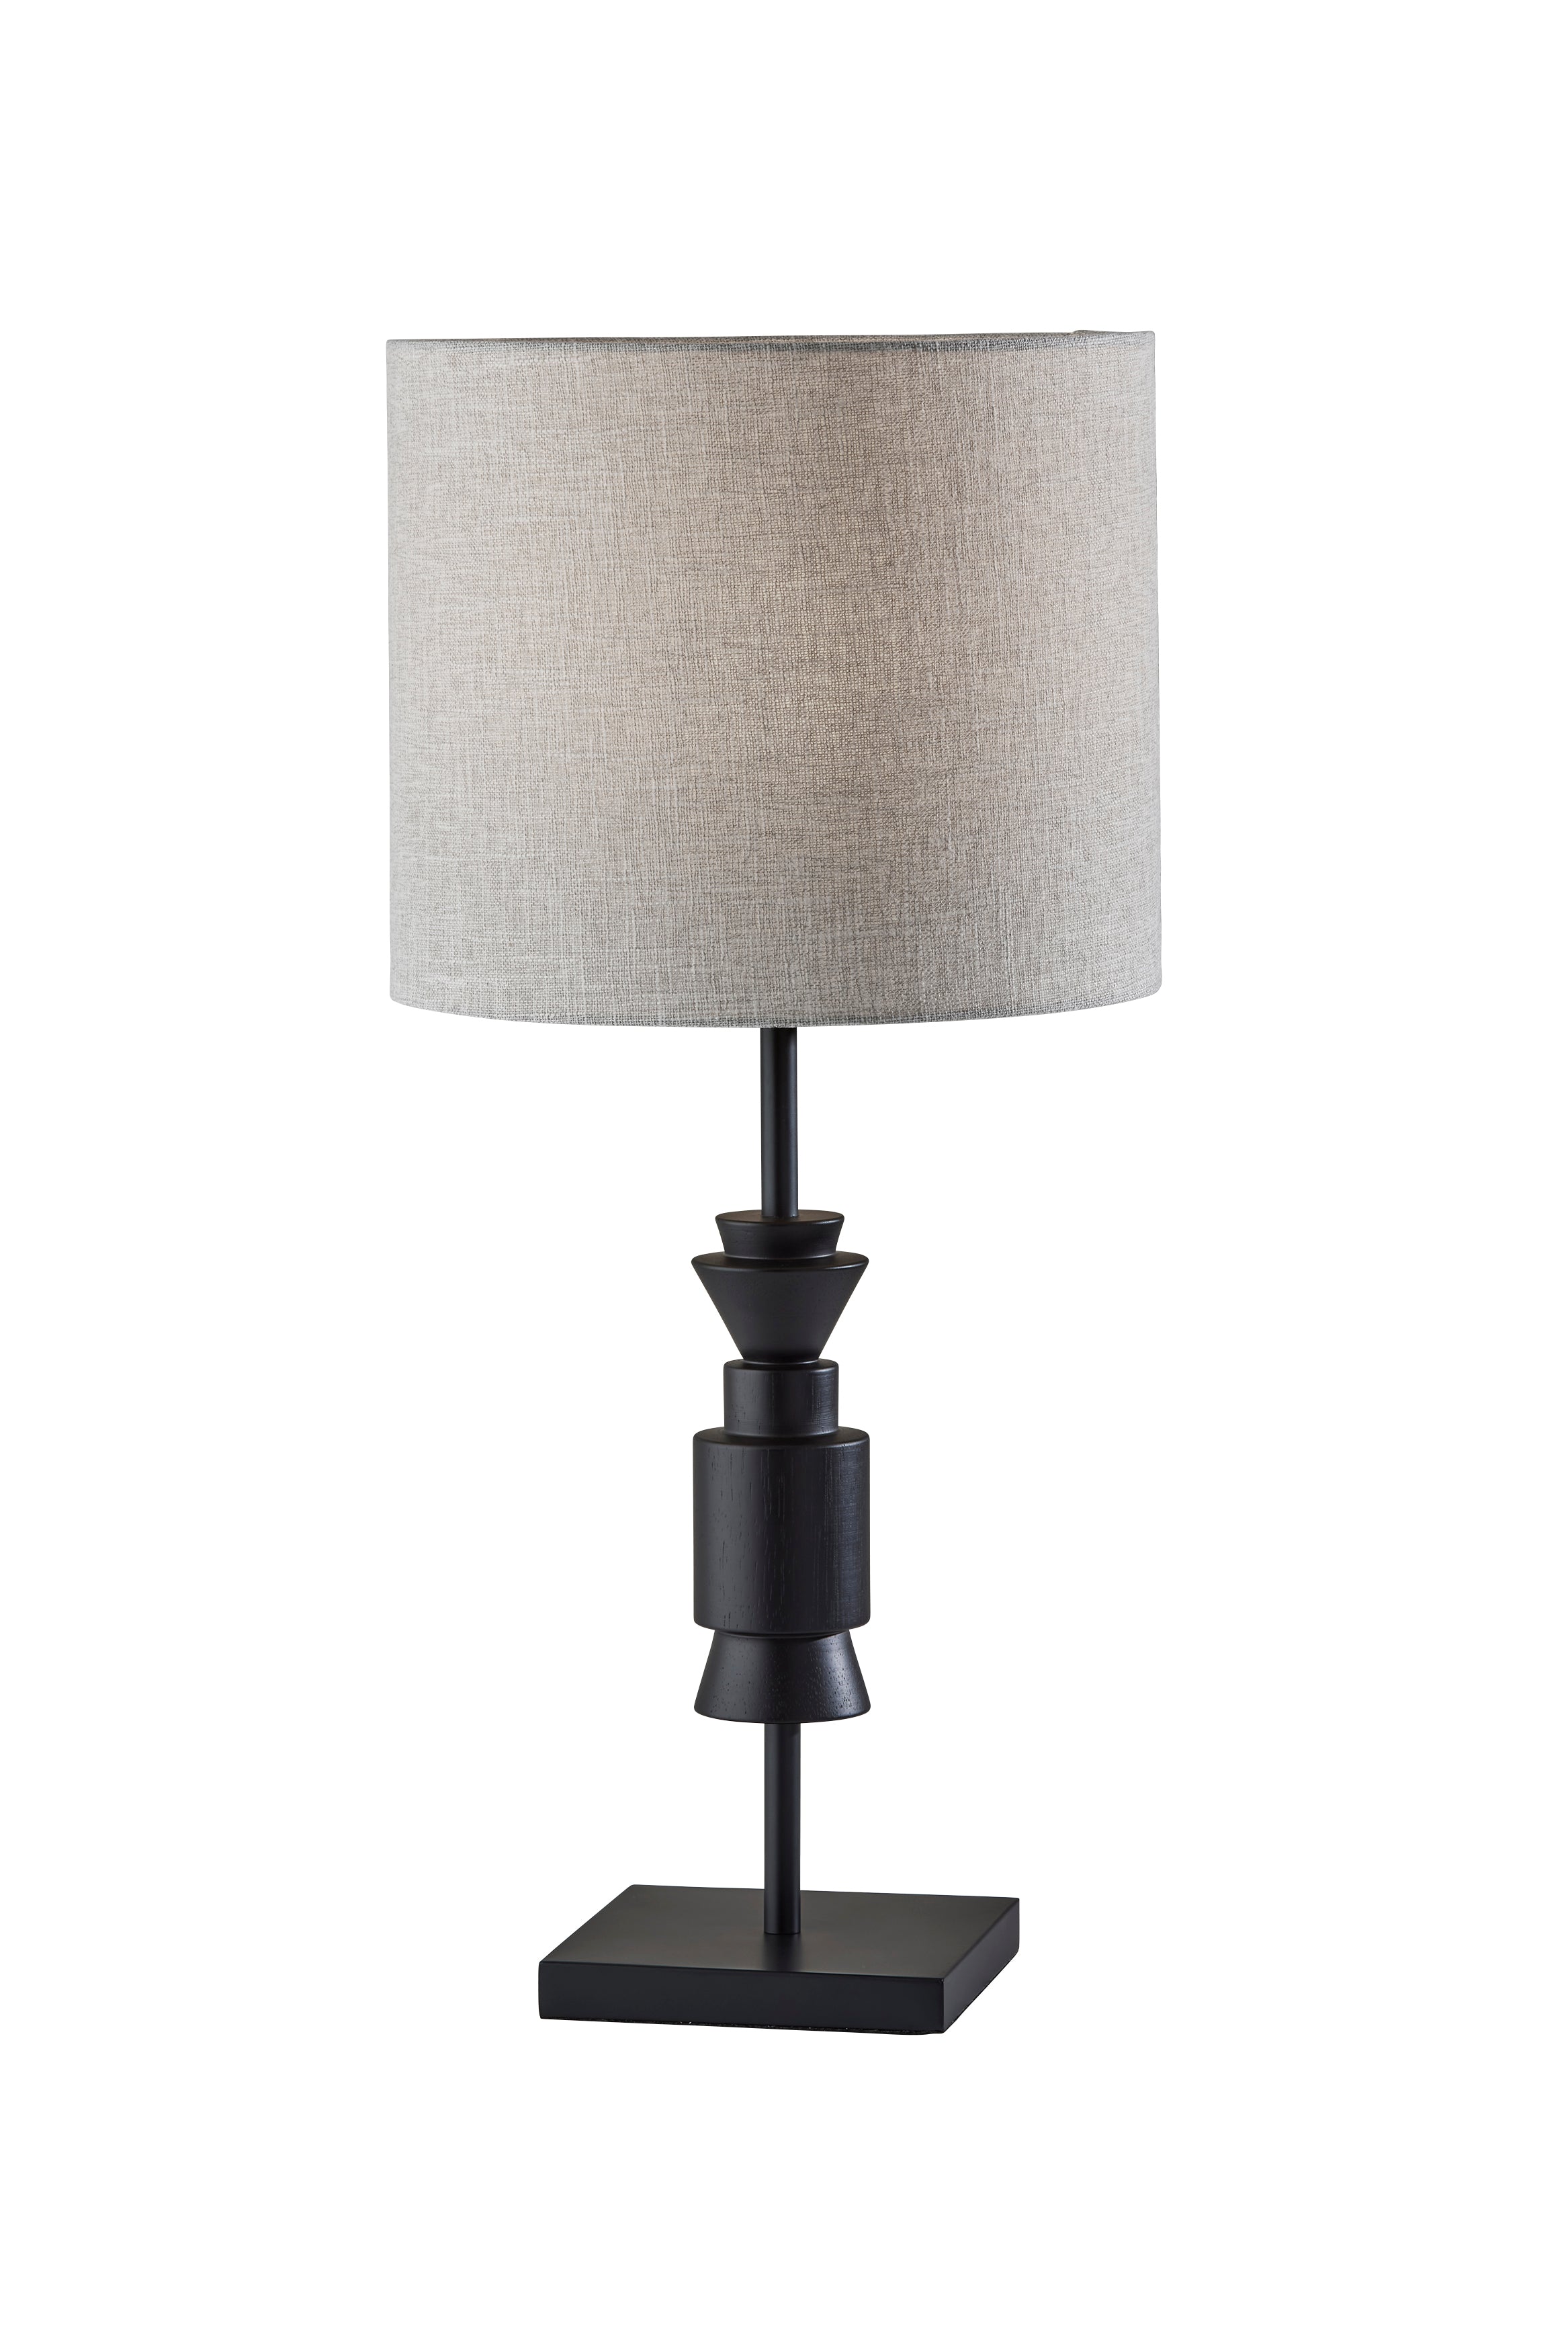 ELTON Table lamp Black, Wood - 4048-01 | ADESSO